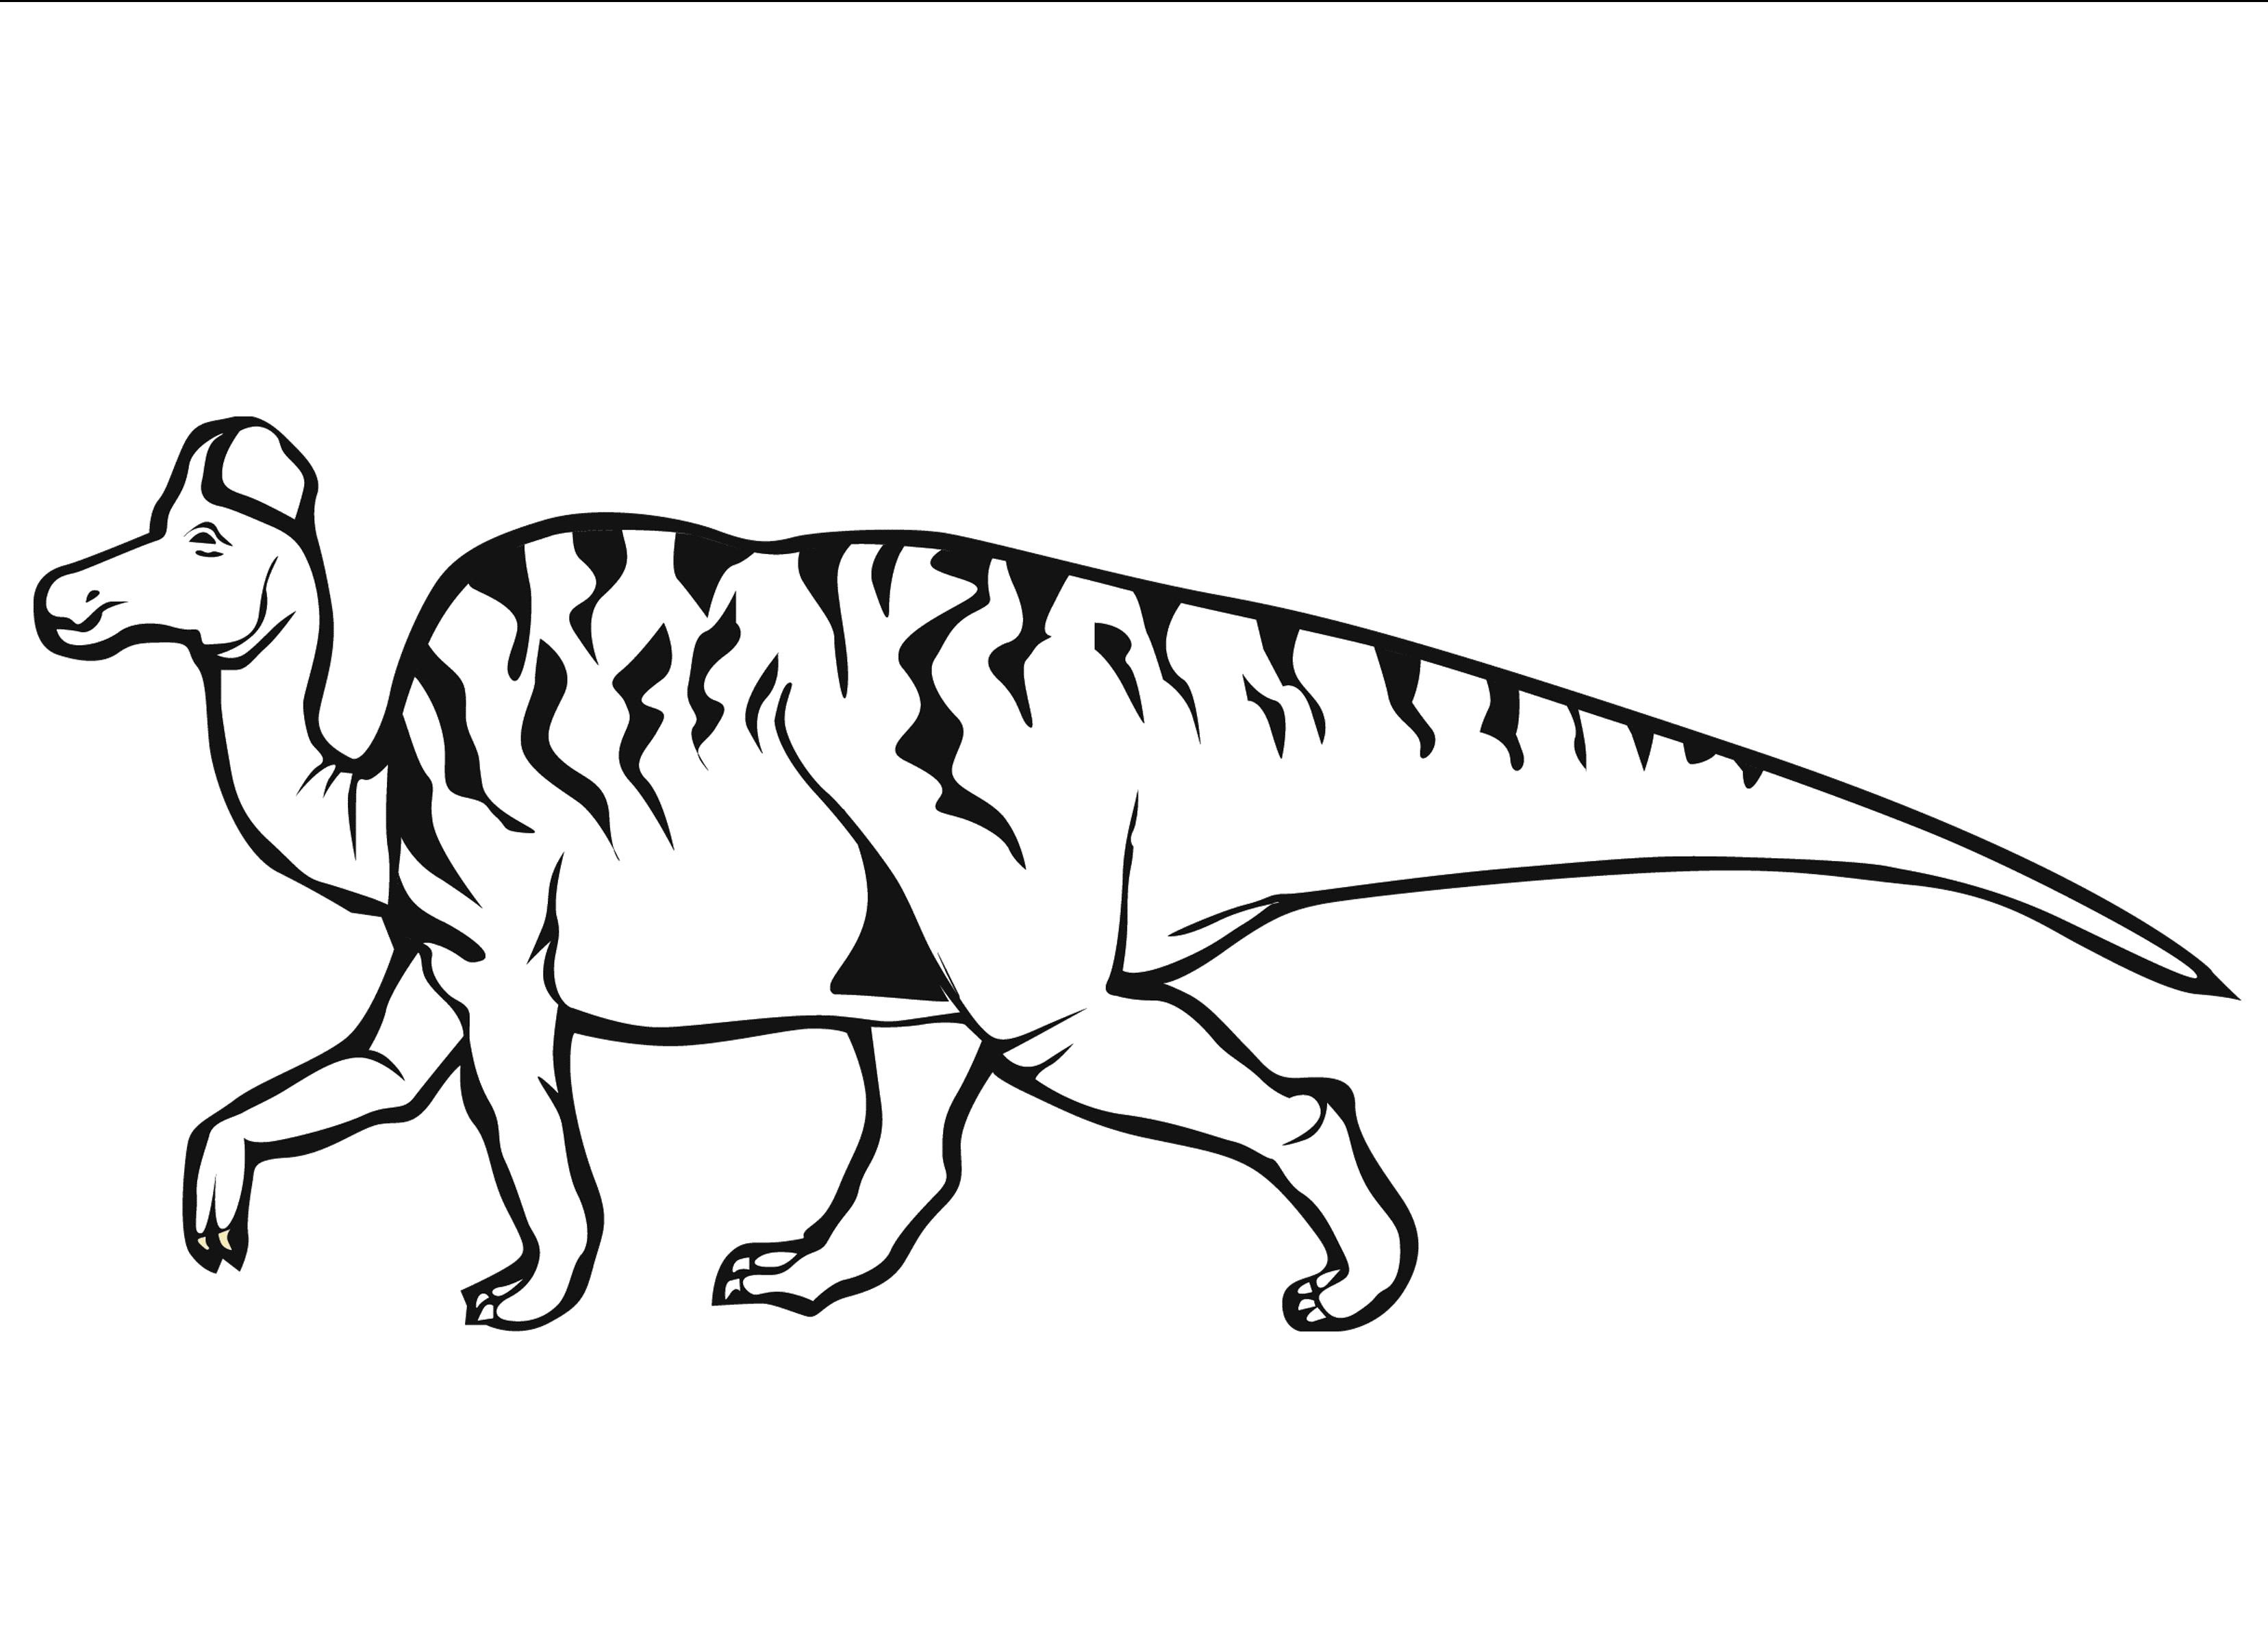 Название: Раскраска Раскраски про динозавров. Категория: динозавр. Теги: динозавр.